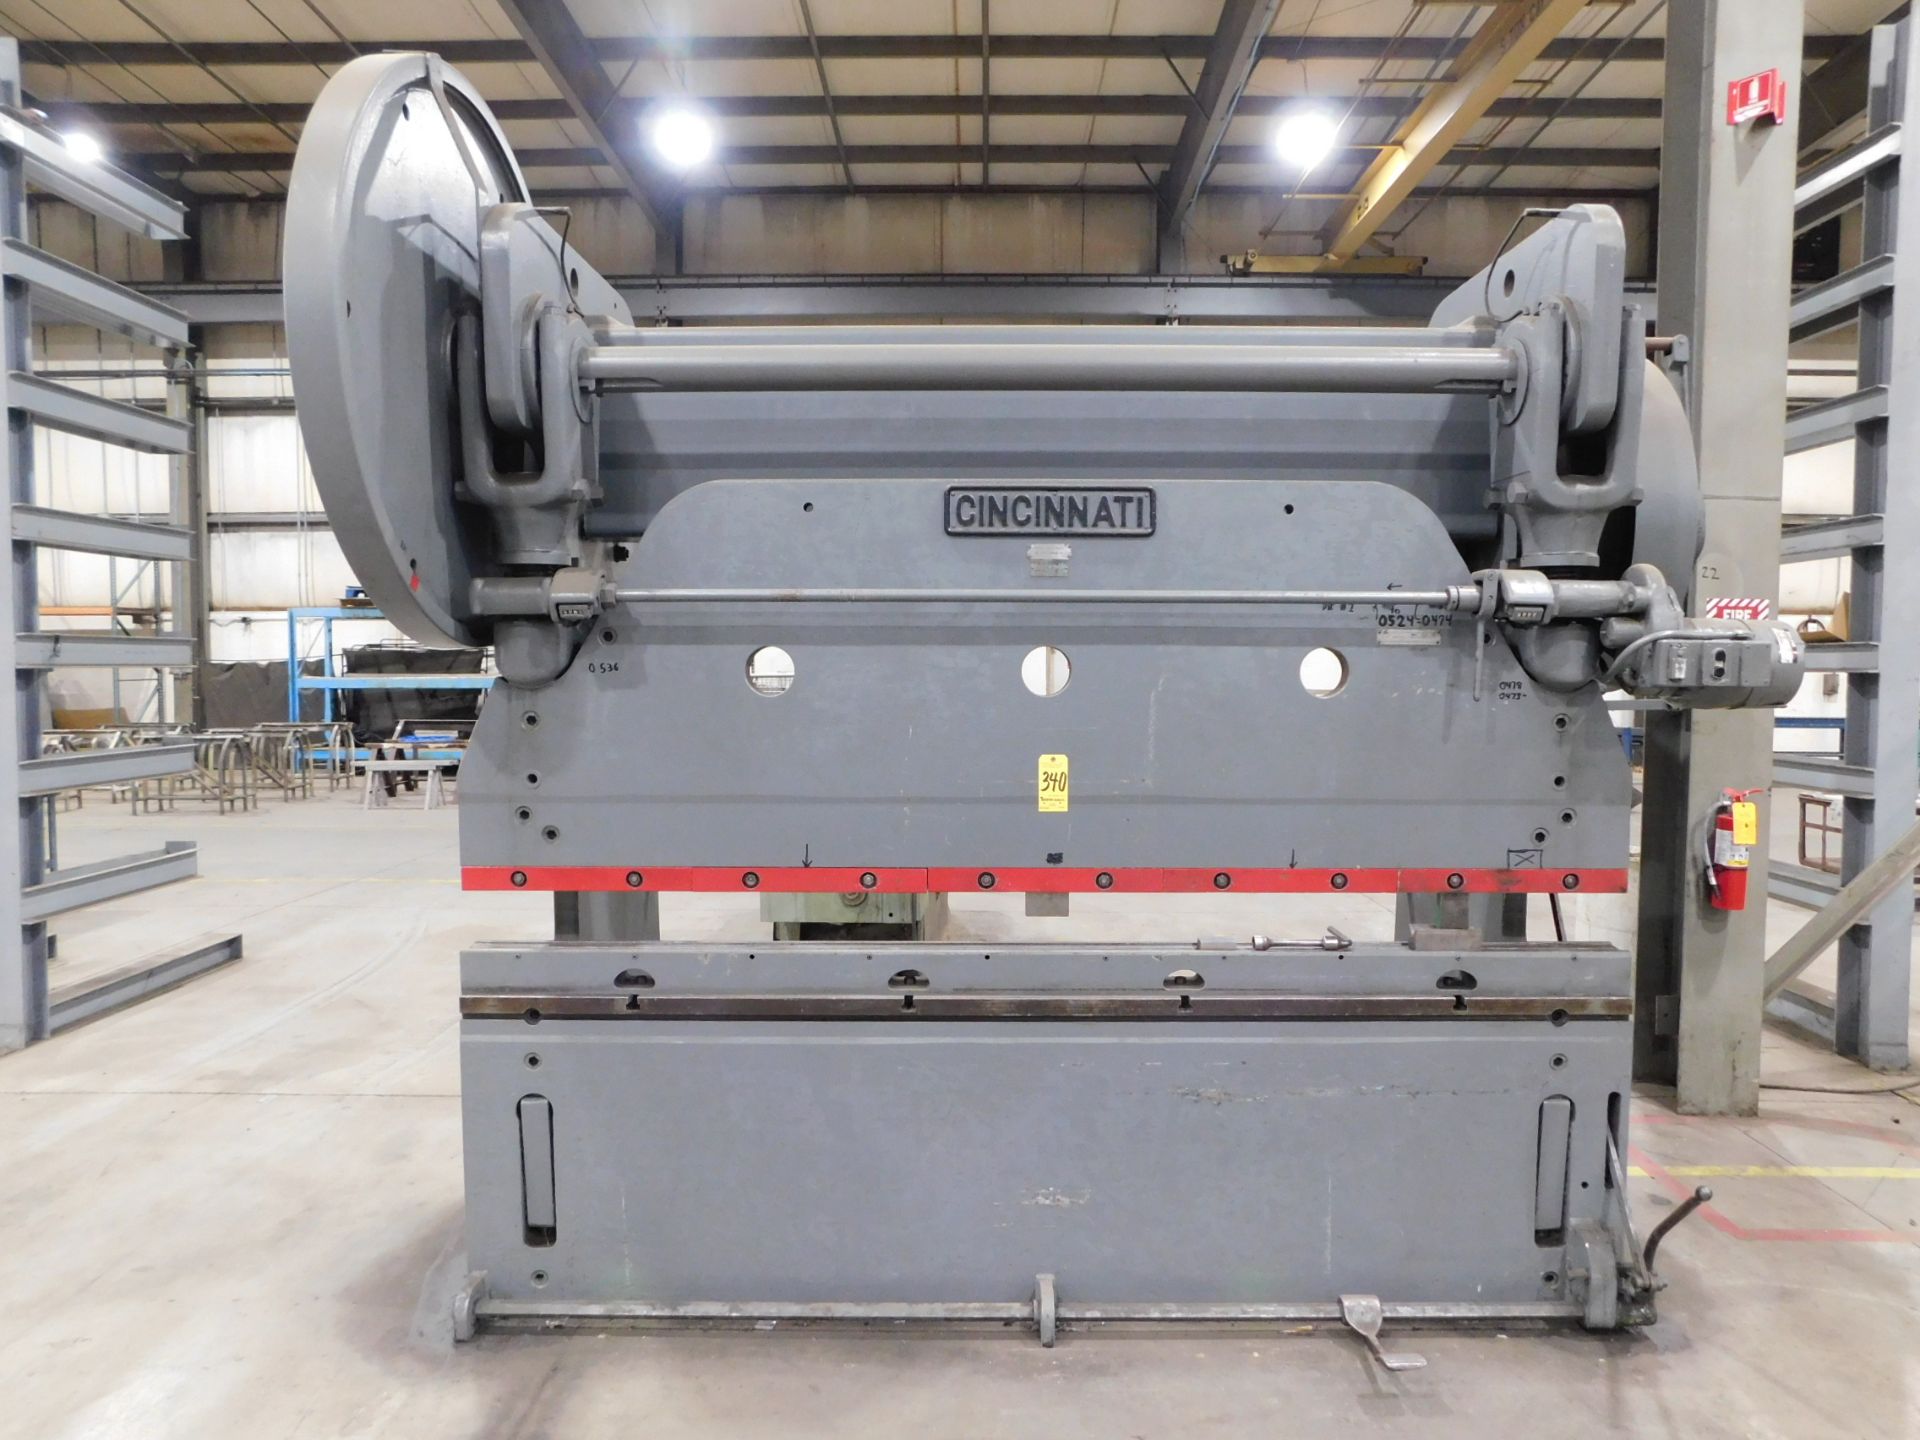 Cincinnati Series 4, Model 9-150 X 8 Mechanical Press Brake, s/n 28532, 225 Tons at Bottom of